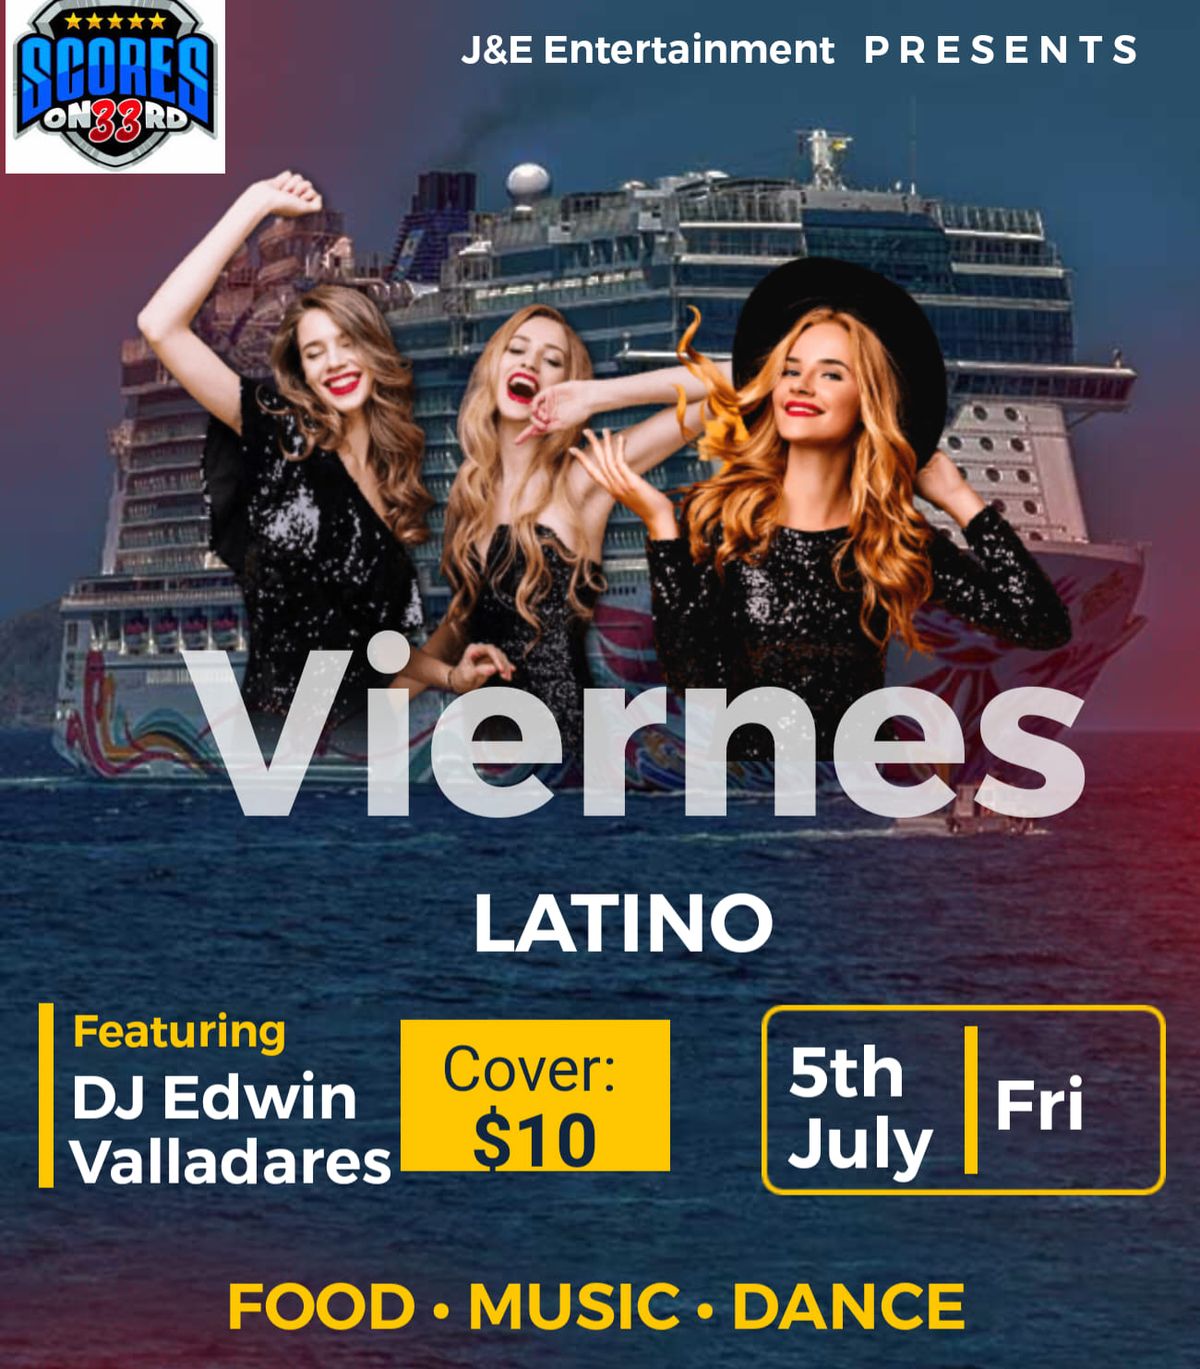 Viernes Latino @ Scores On 33rd